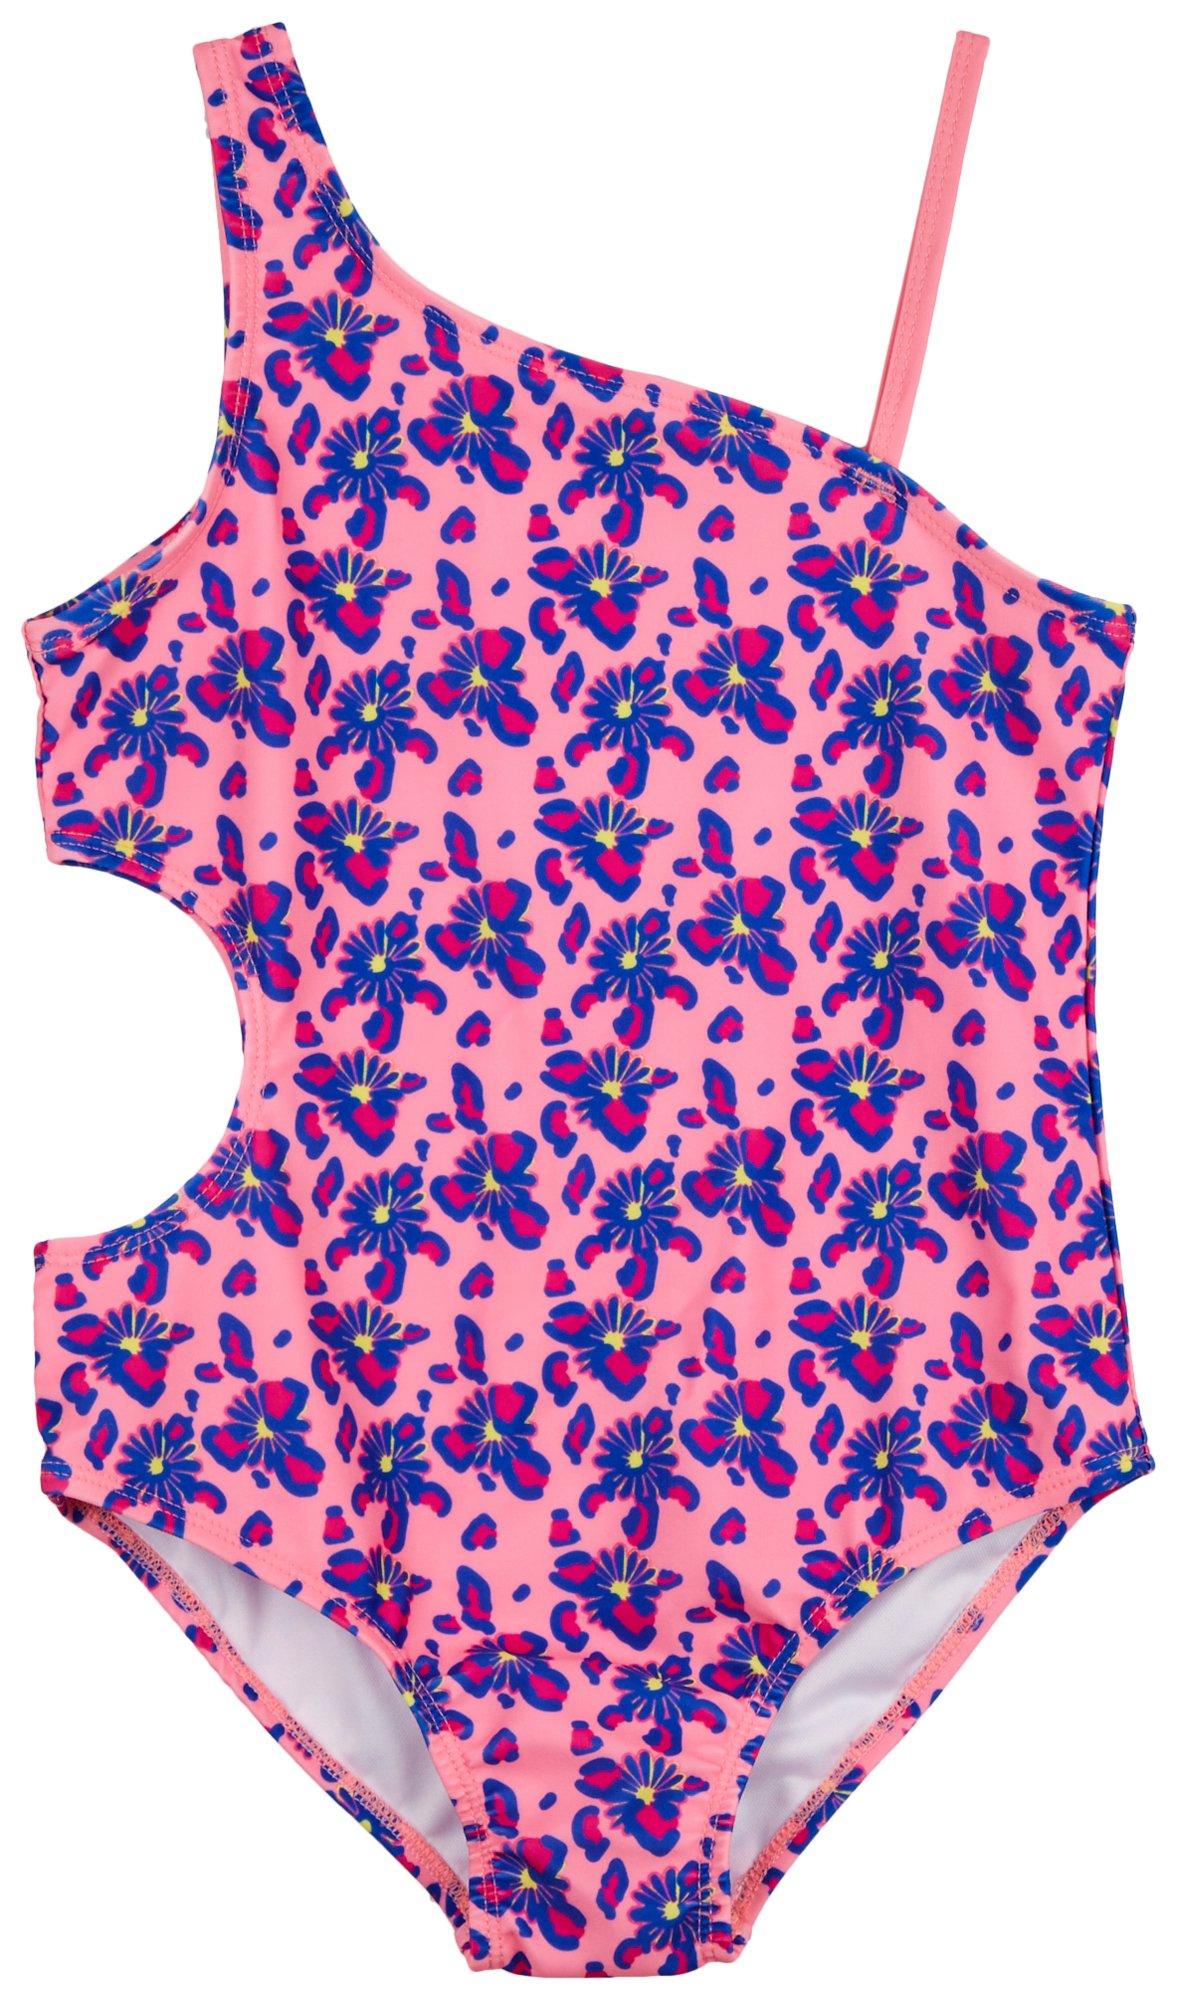 BRIGHT SKY Little & Big Girls 1 Pc. Floral Cheetah Swimsuit